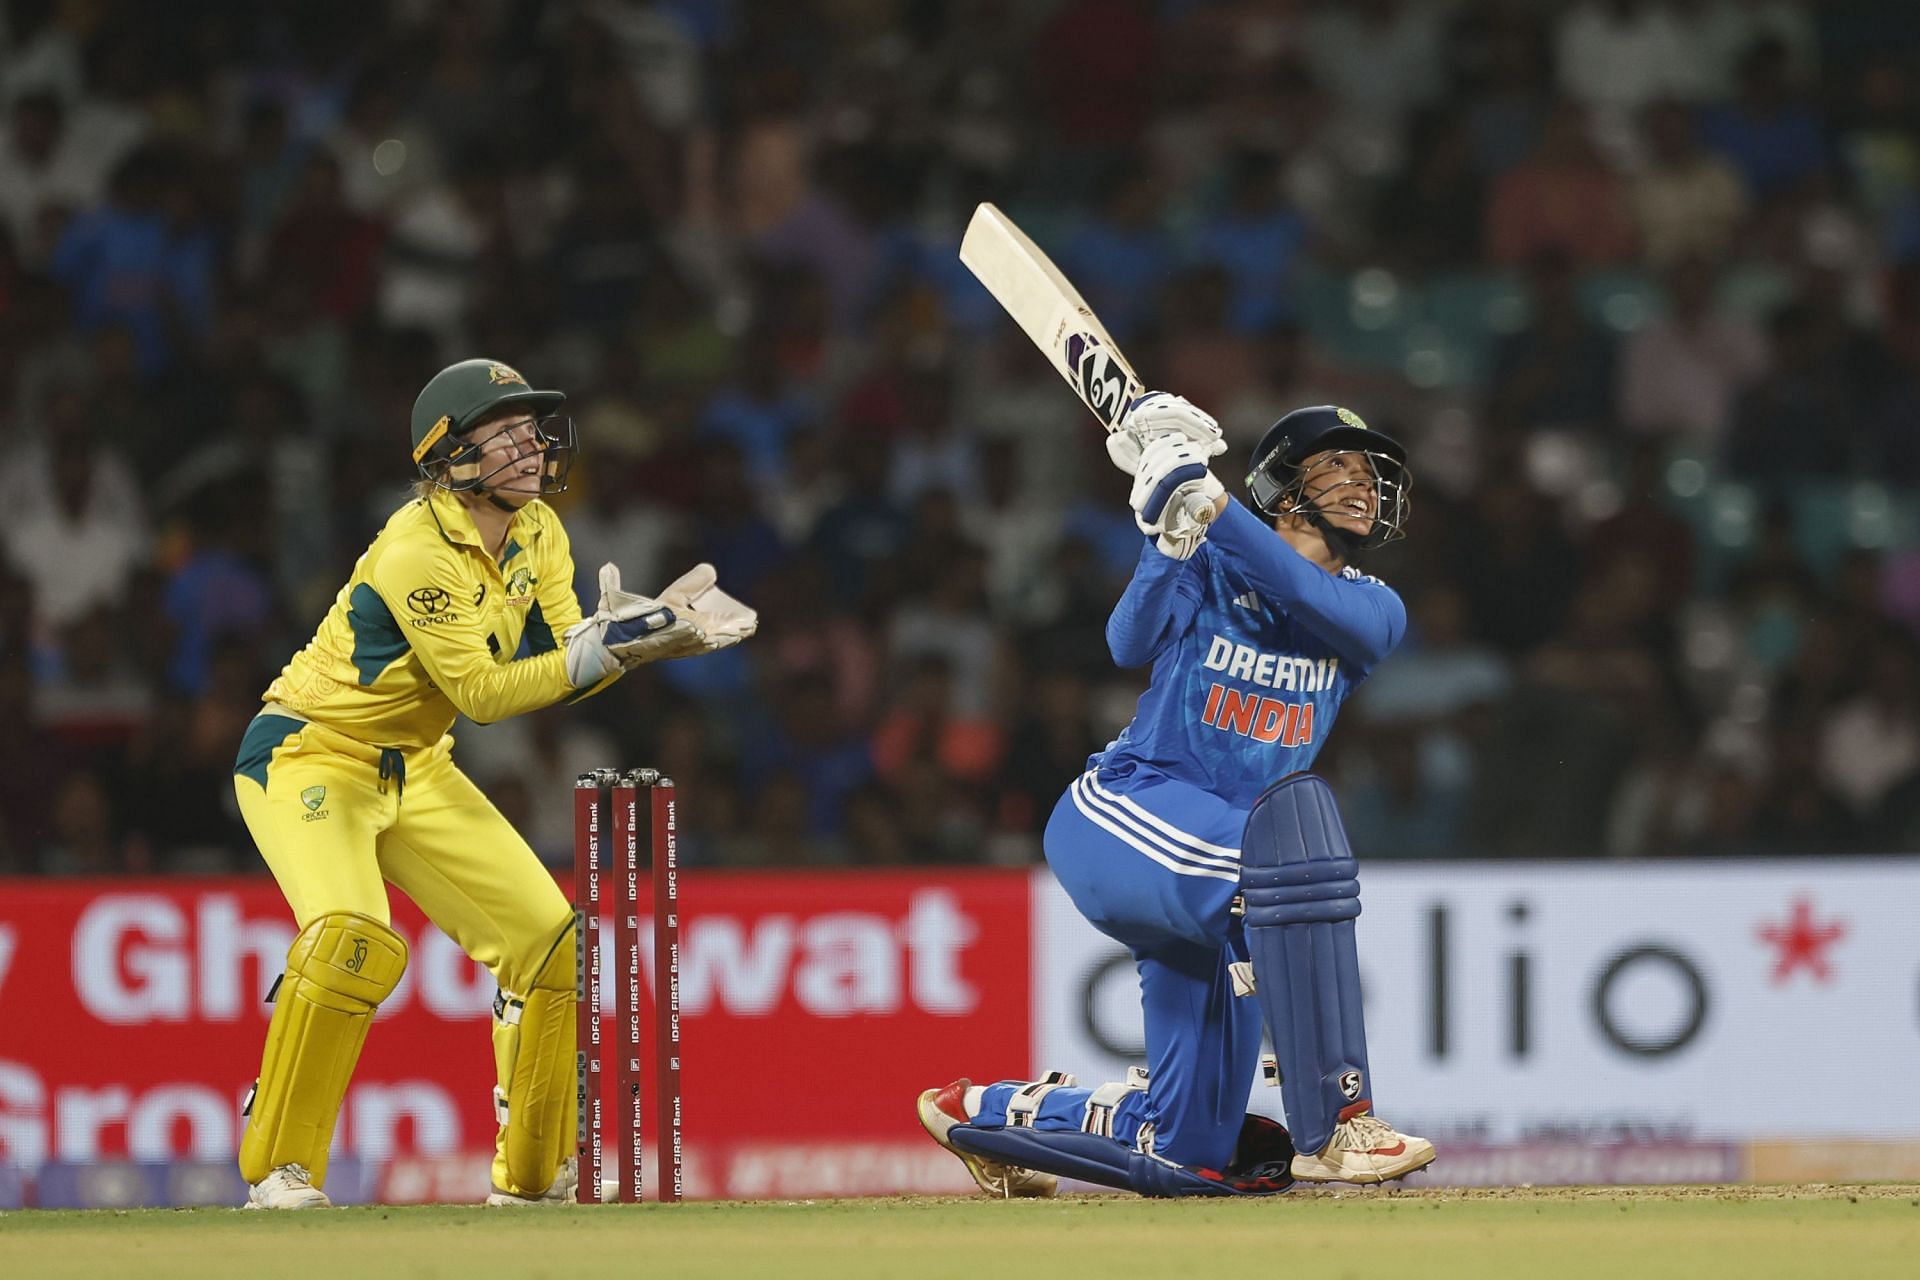 Smriti Mandhana batting in a T20I against Australia. (Pic: Getty Images)